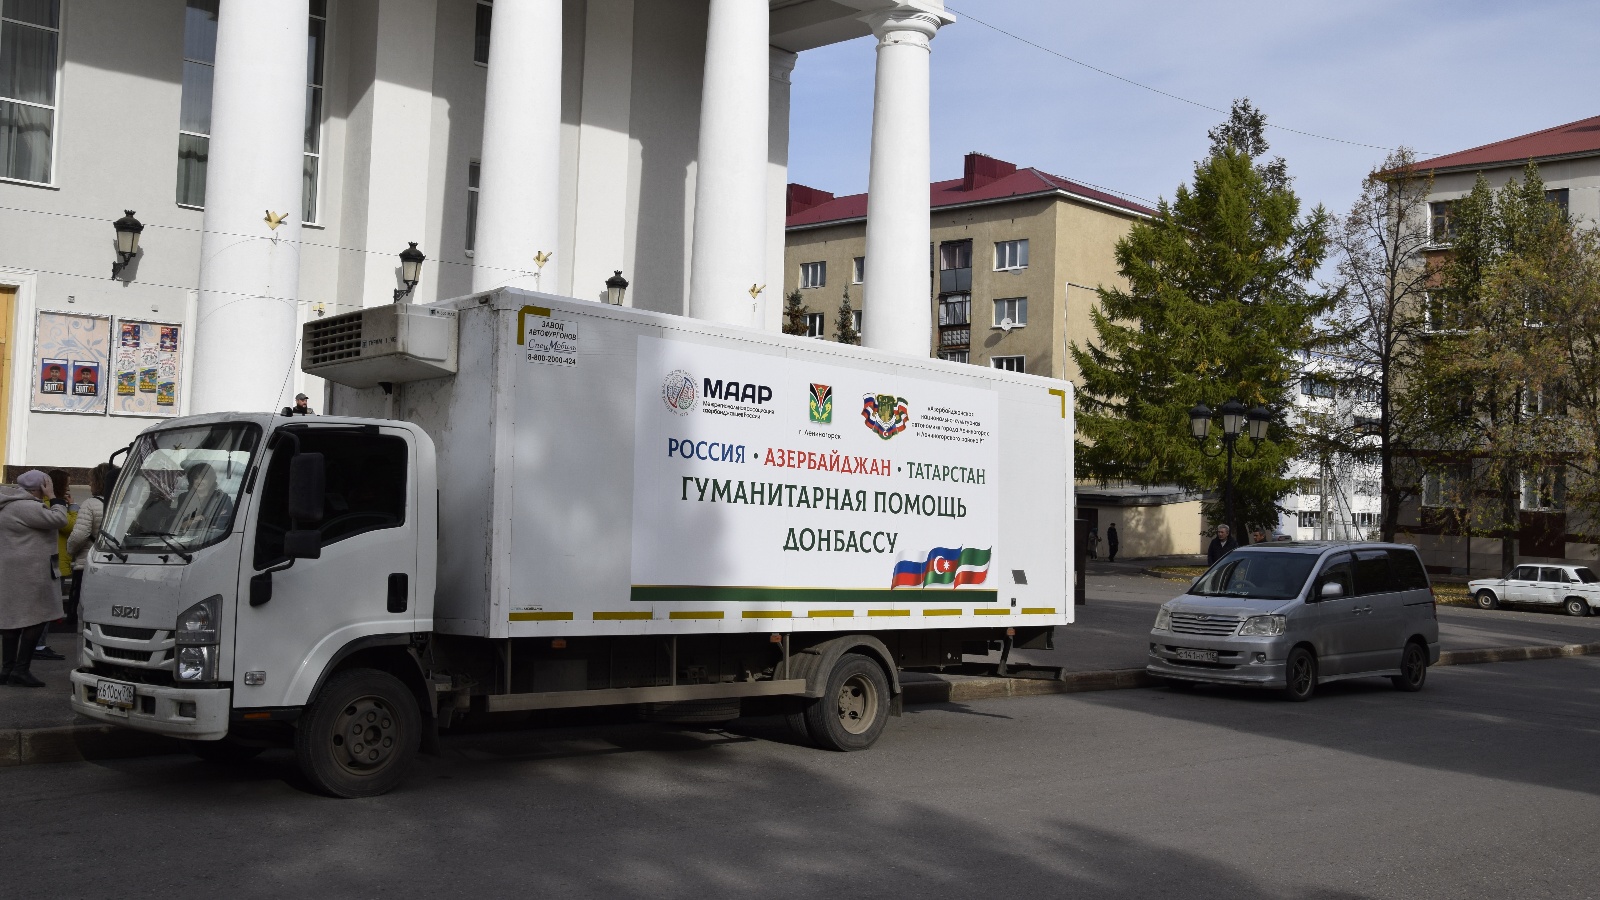 Лениногорскидагы азәрбайҗаннар җәмгыяте Донбасстан күченгәннәргә гуманитар ярдәм җибәргән